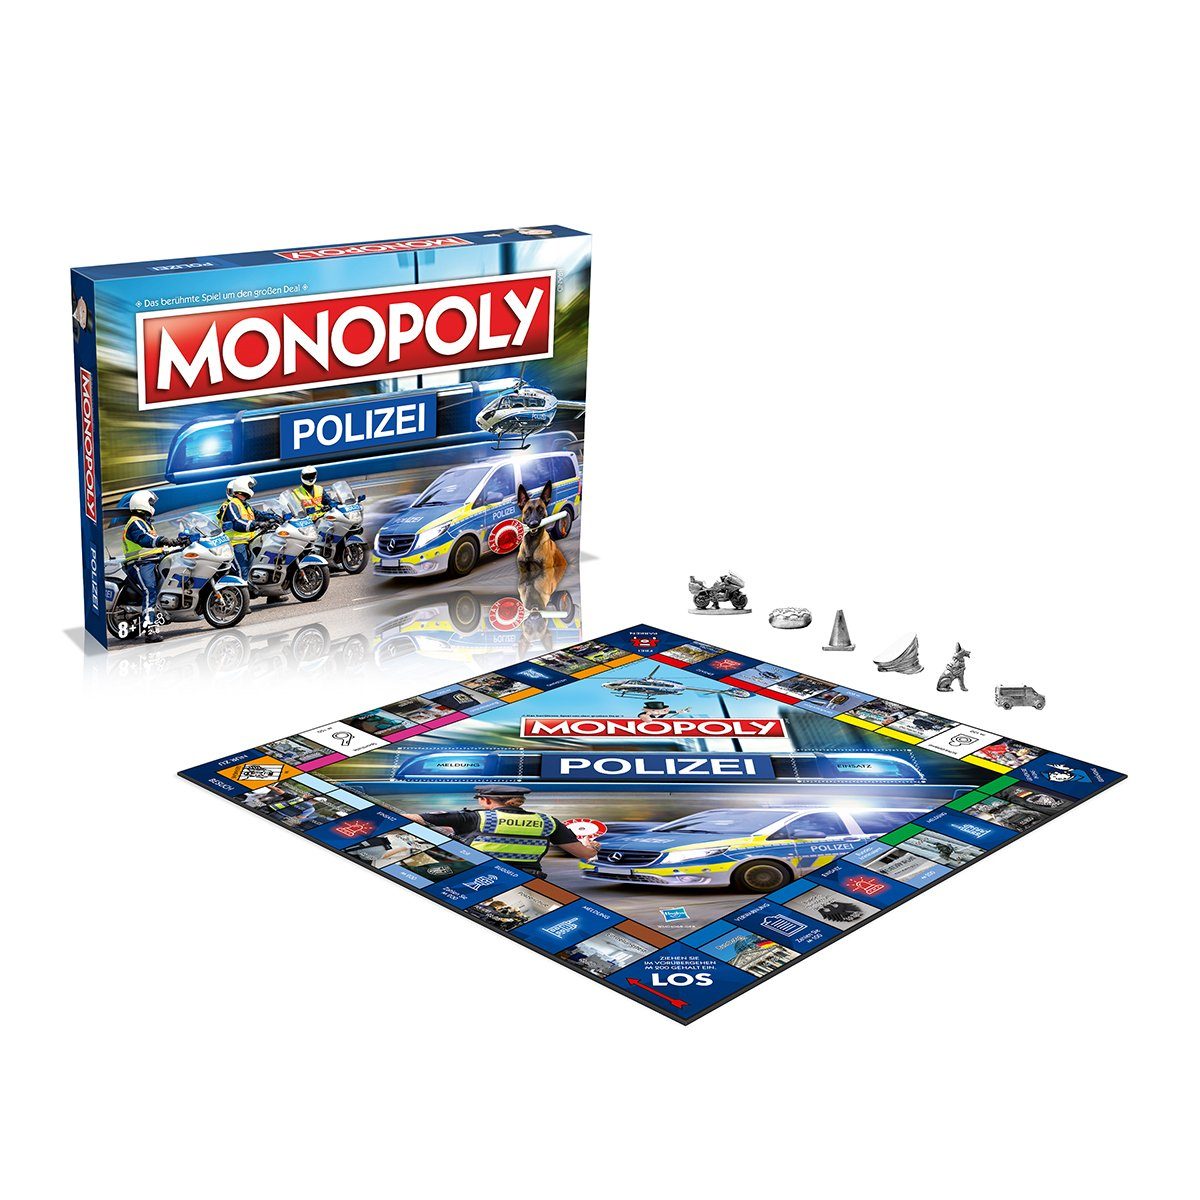 - Winning Brettspiel Moves Polizei Monopoly Spiel,